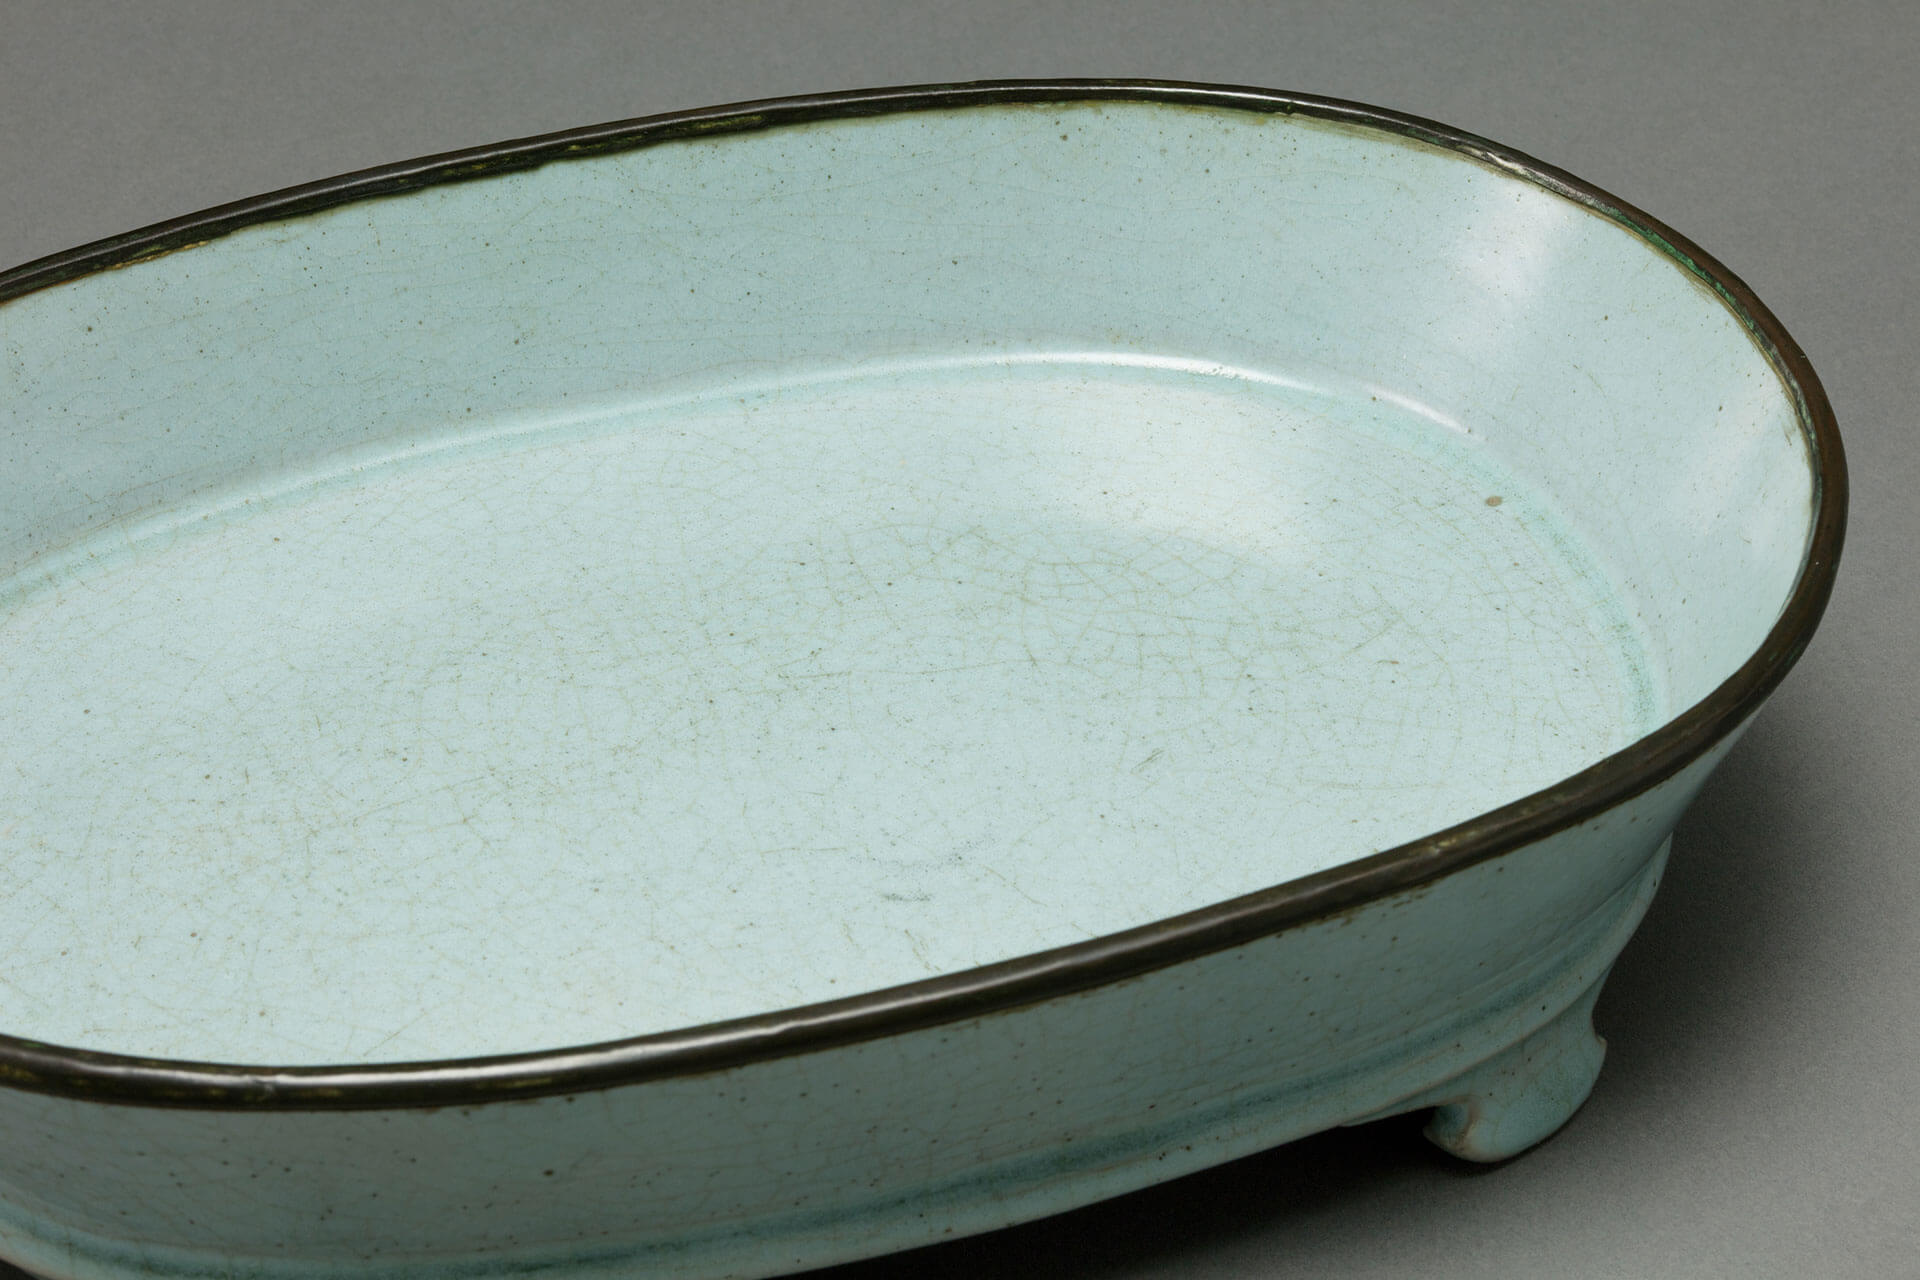 Narcissus basin in light bluish-green glaze, Ru ware